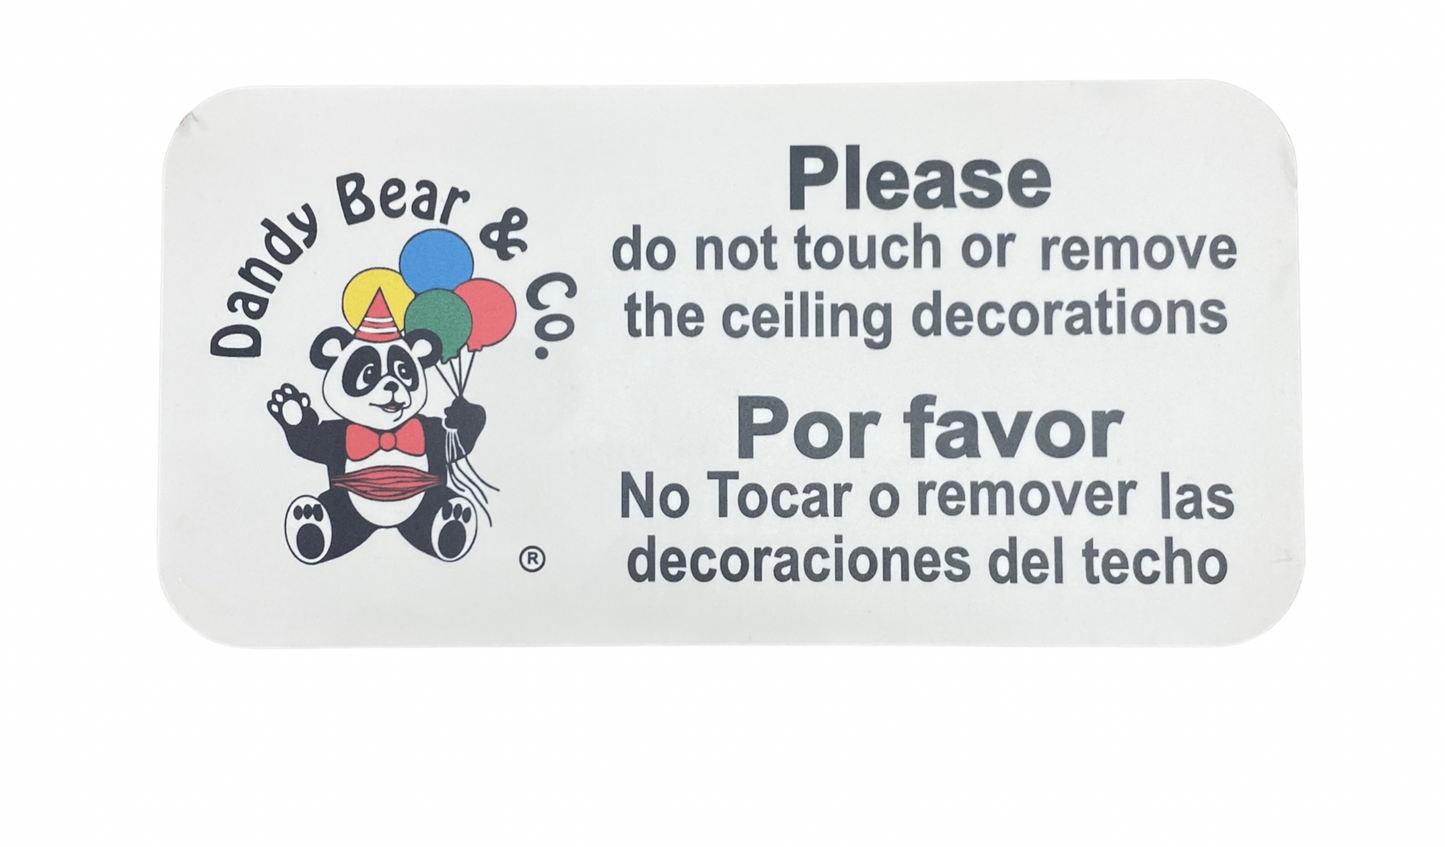 Dandy Bear Original Signs - ceiling decorations sign